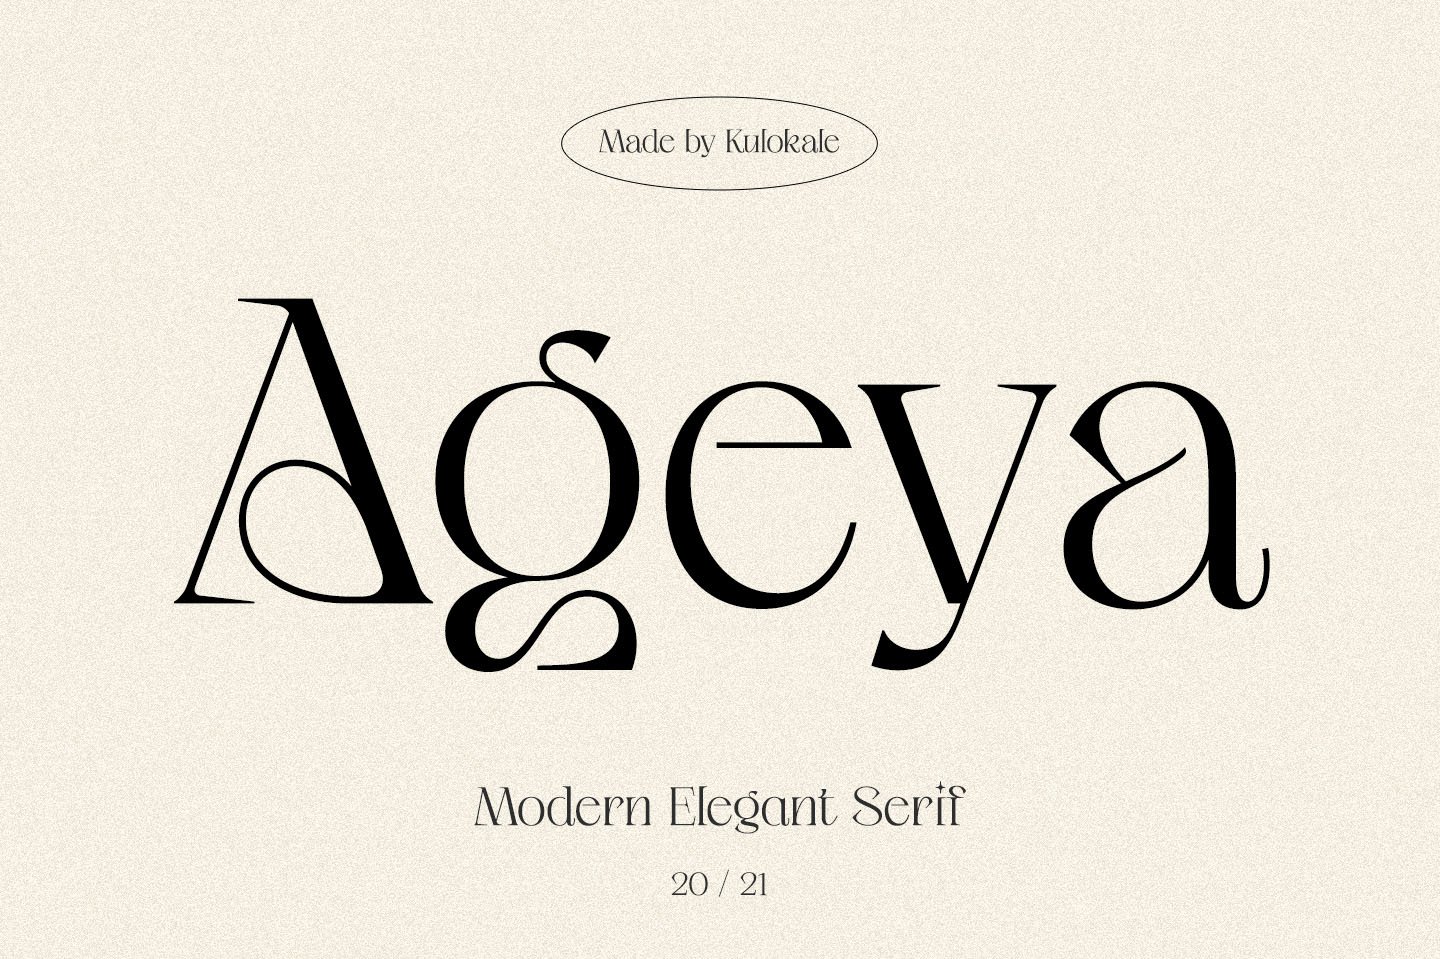 Ageya - Modern Elegant Serif Font cover image.